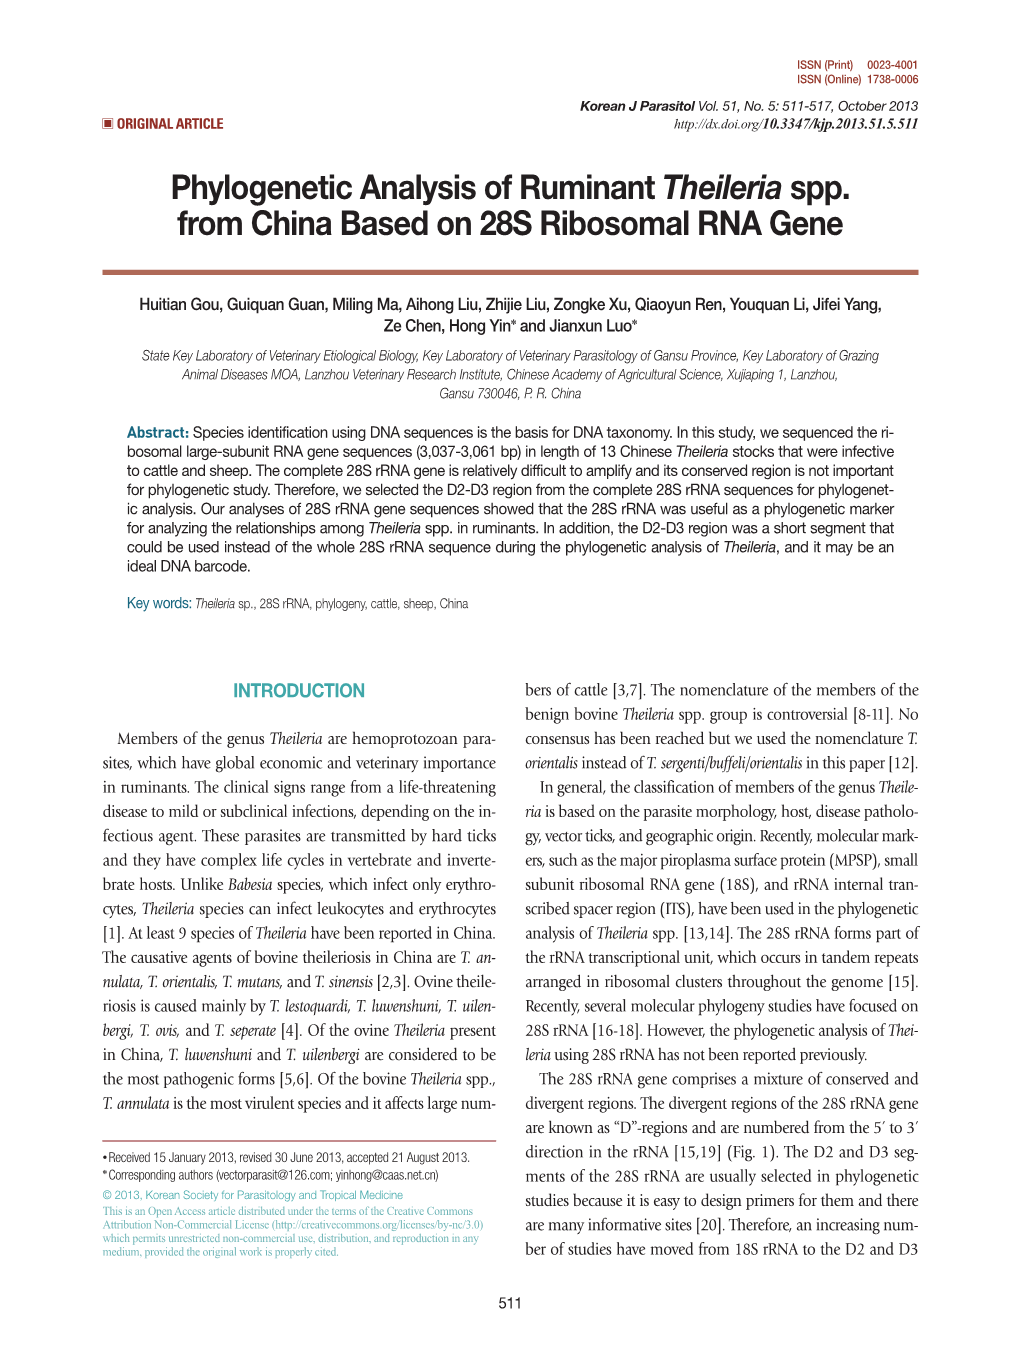 Phylogenetic Analysis of Ruminant Theileria Spp. from China Based on 28S Ribosomal RNA Gene